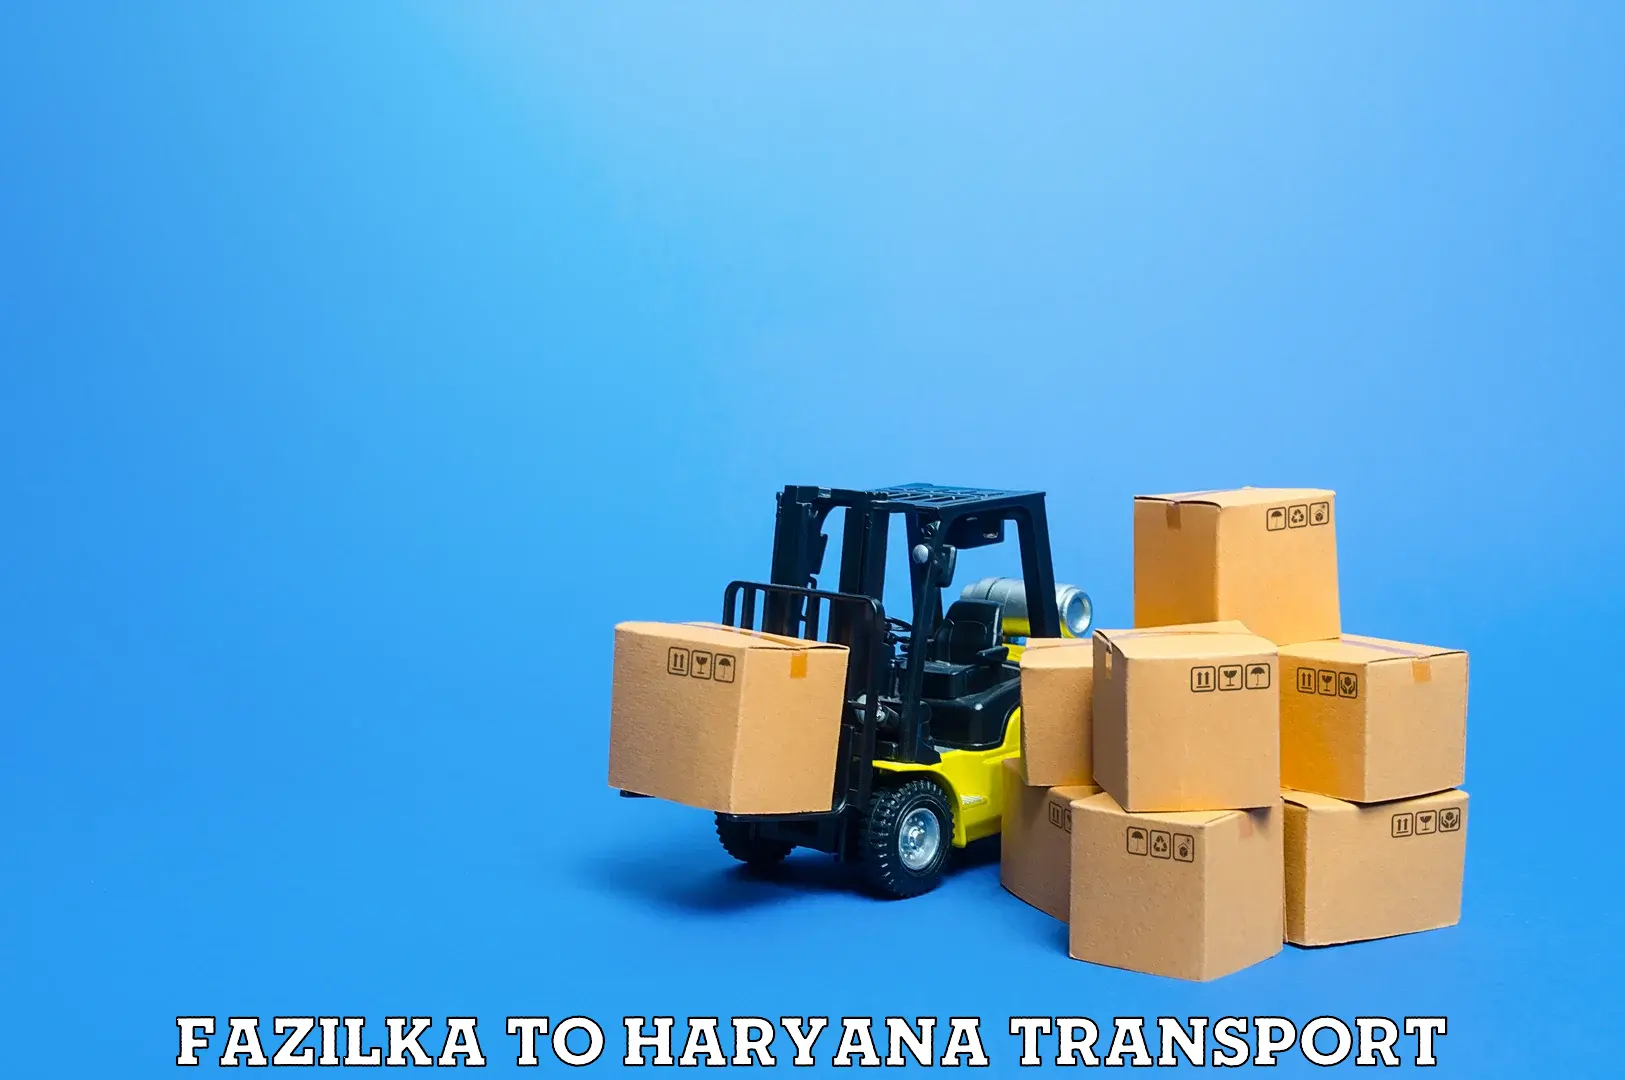 Lorry transport service Fazilka to Gurugram